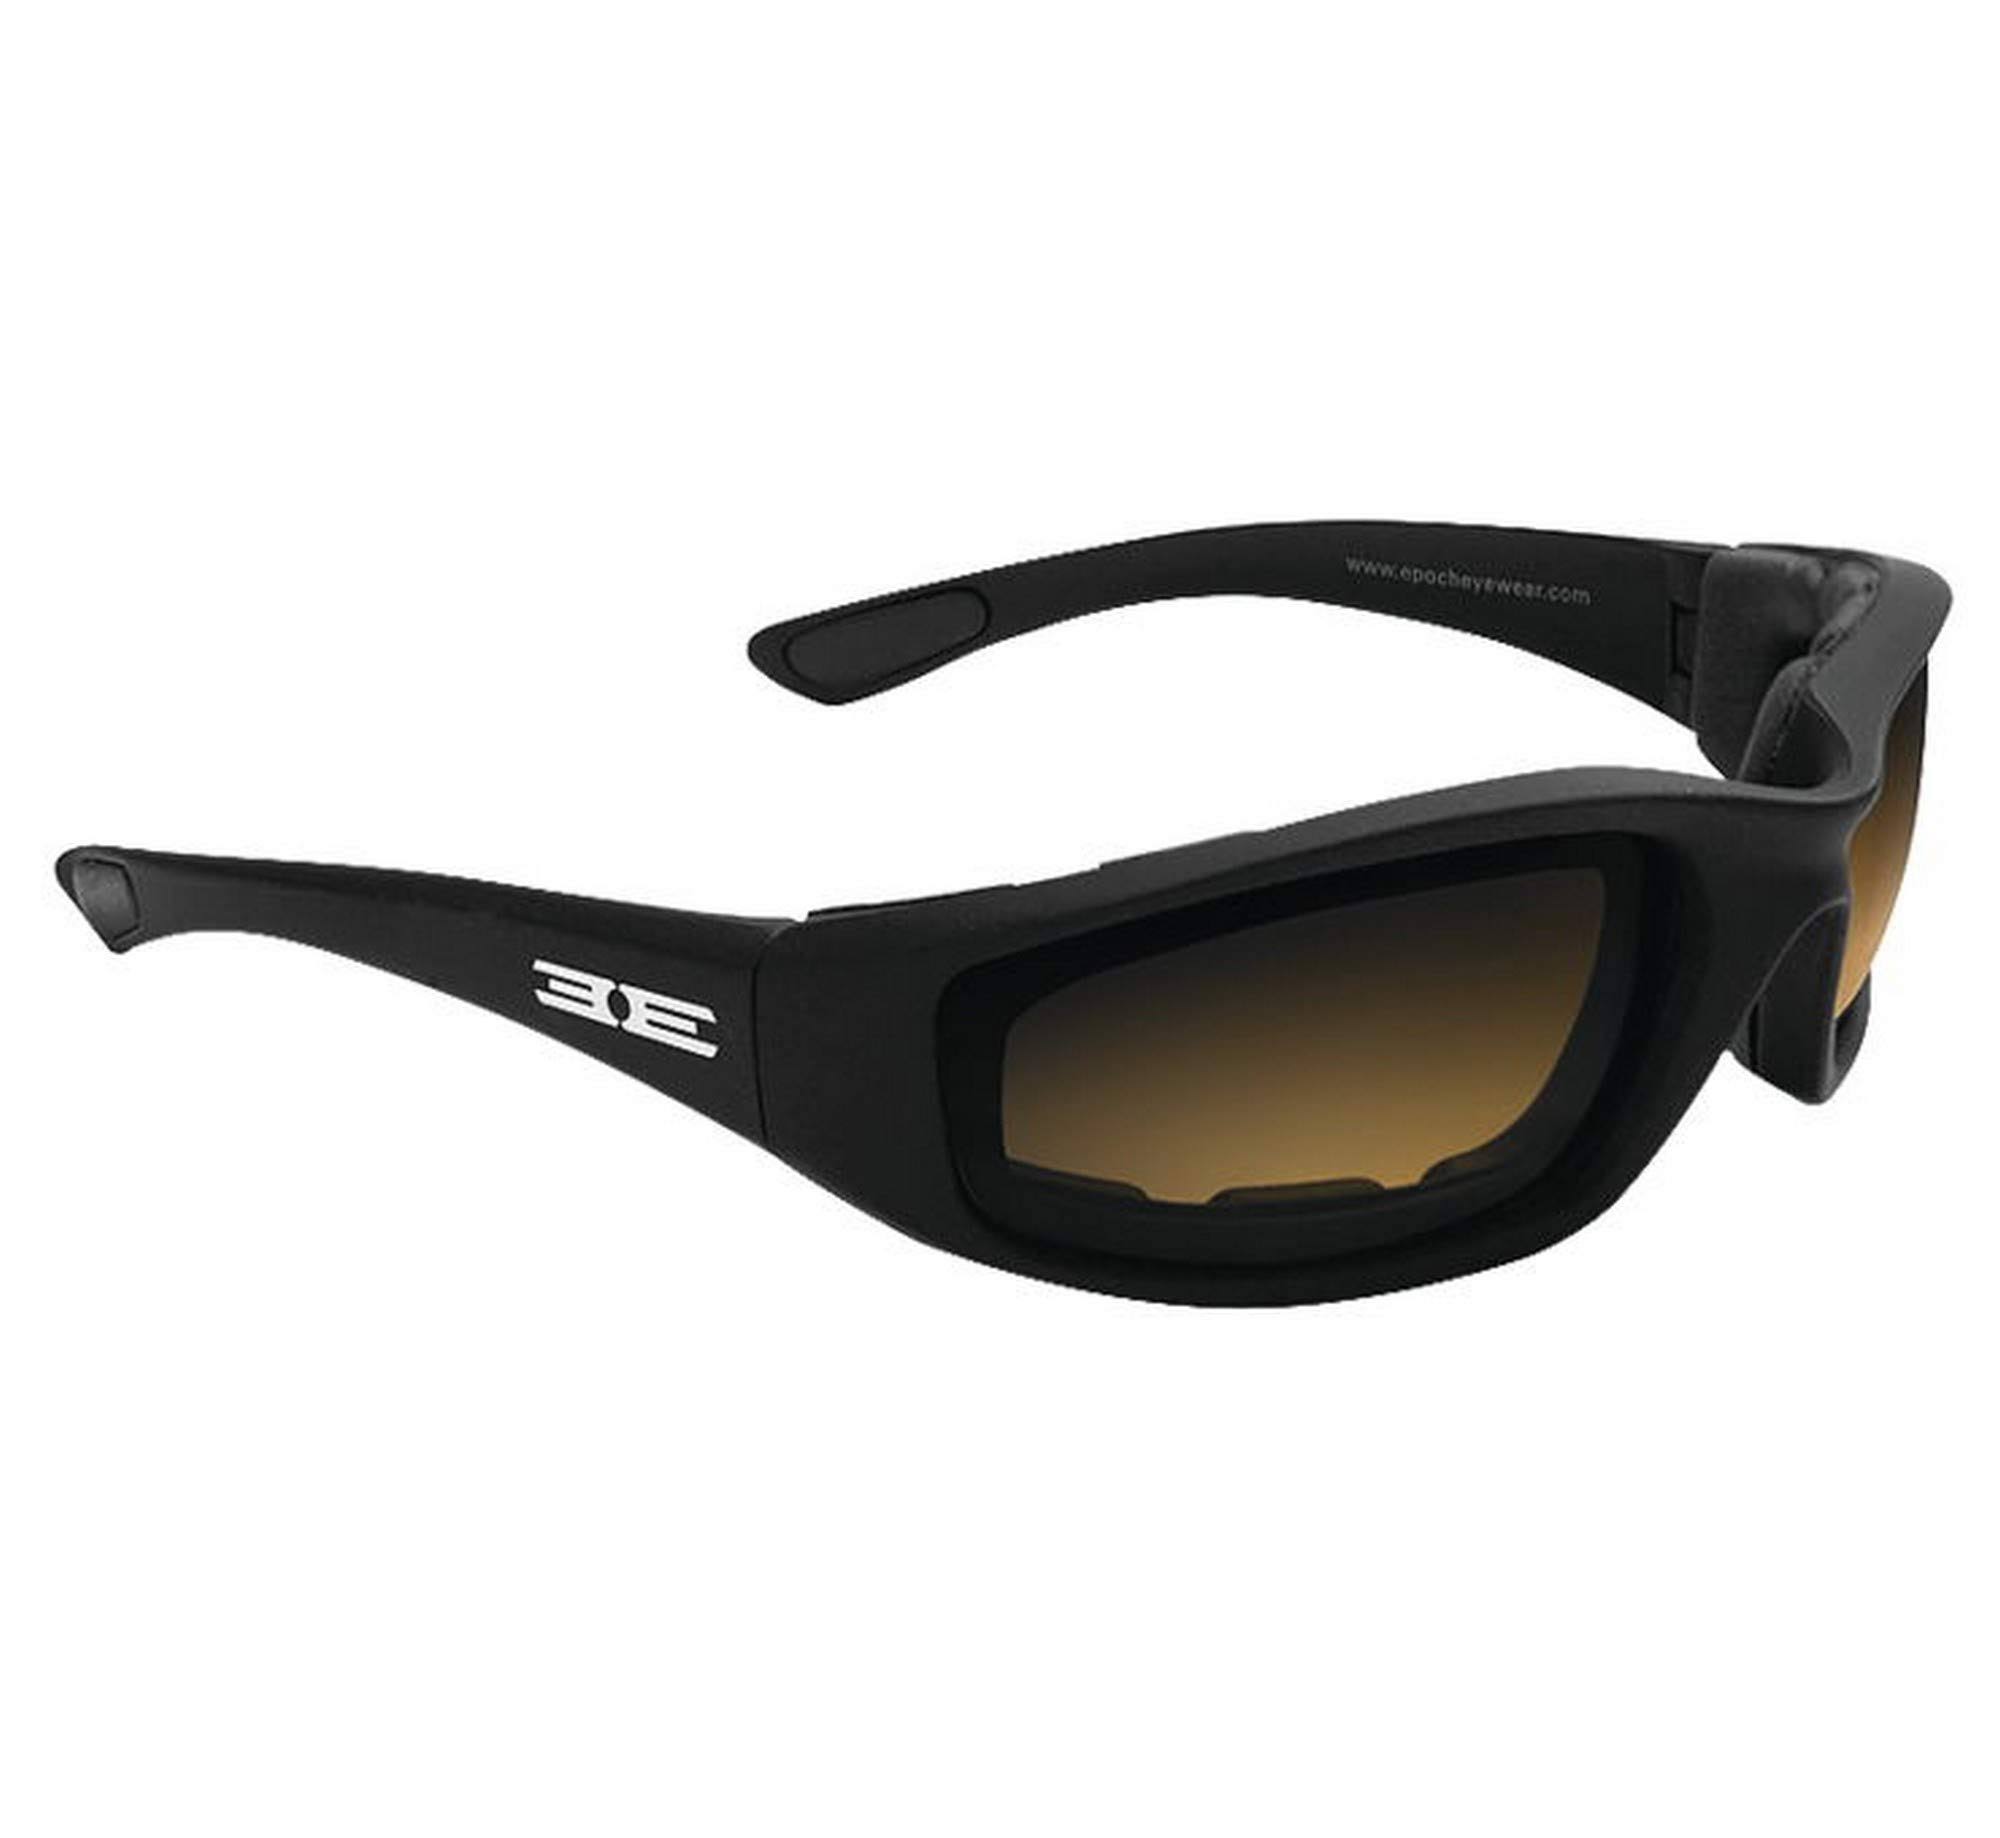 Epoch Foam Photochromic Sunglasses - Black/Amber/Smoke